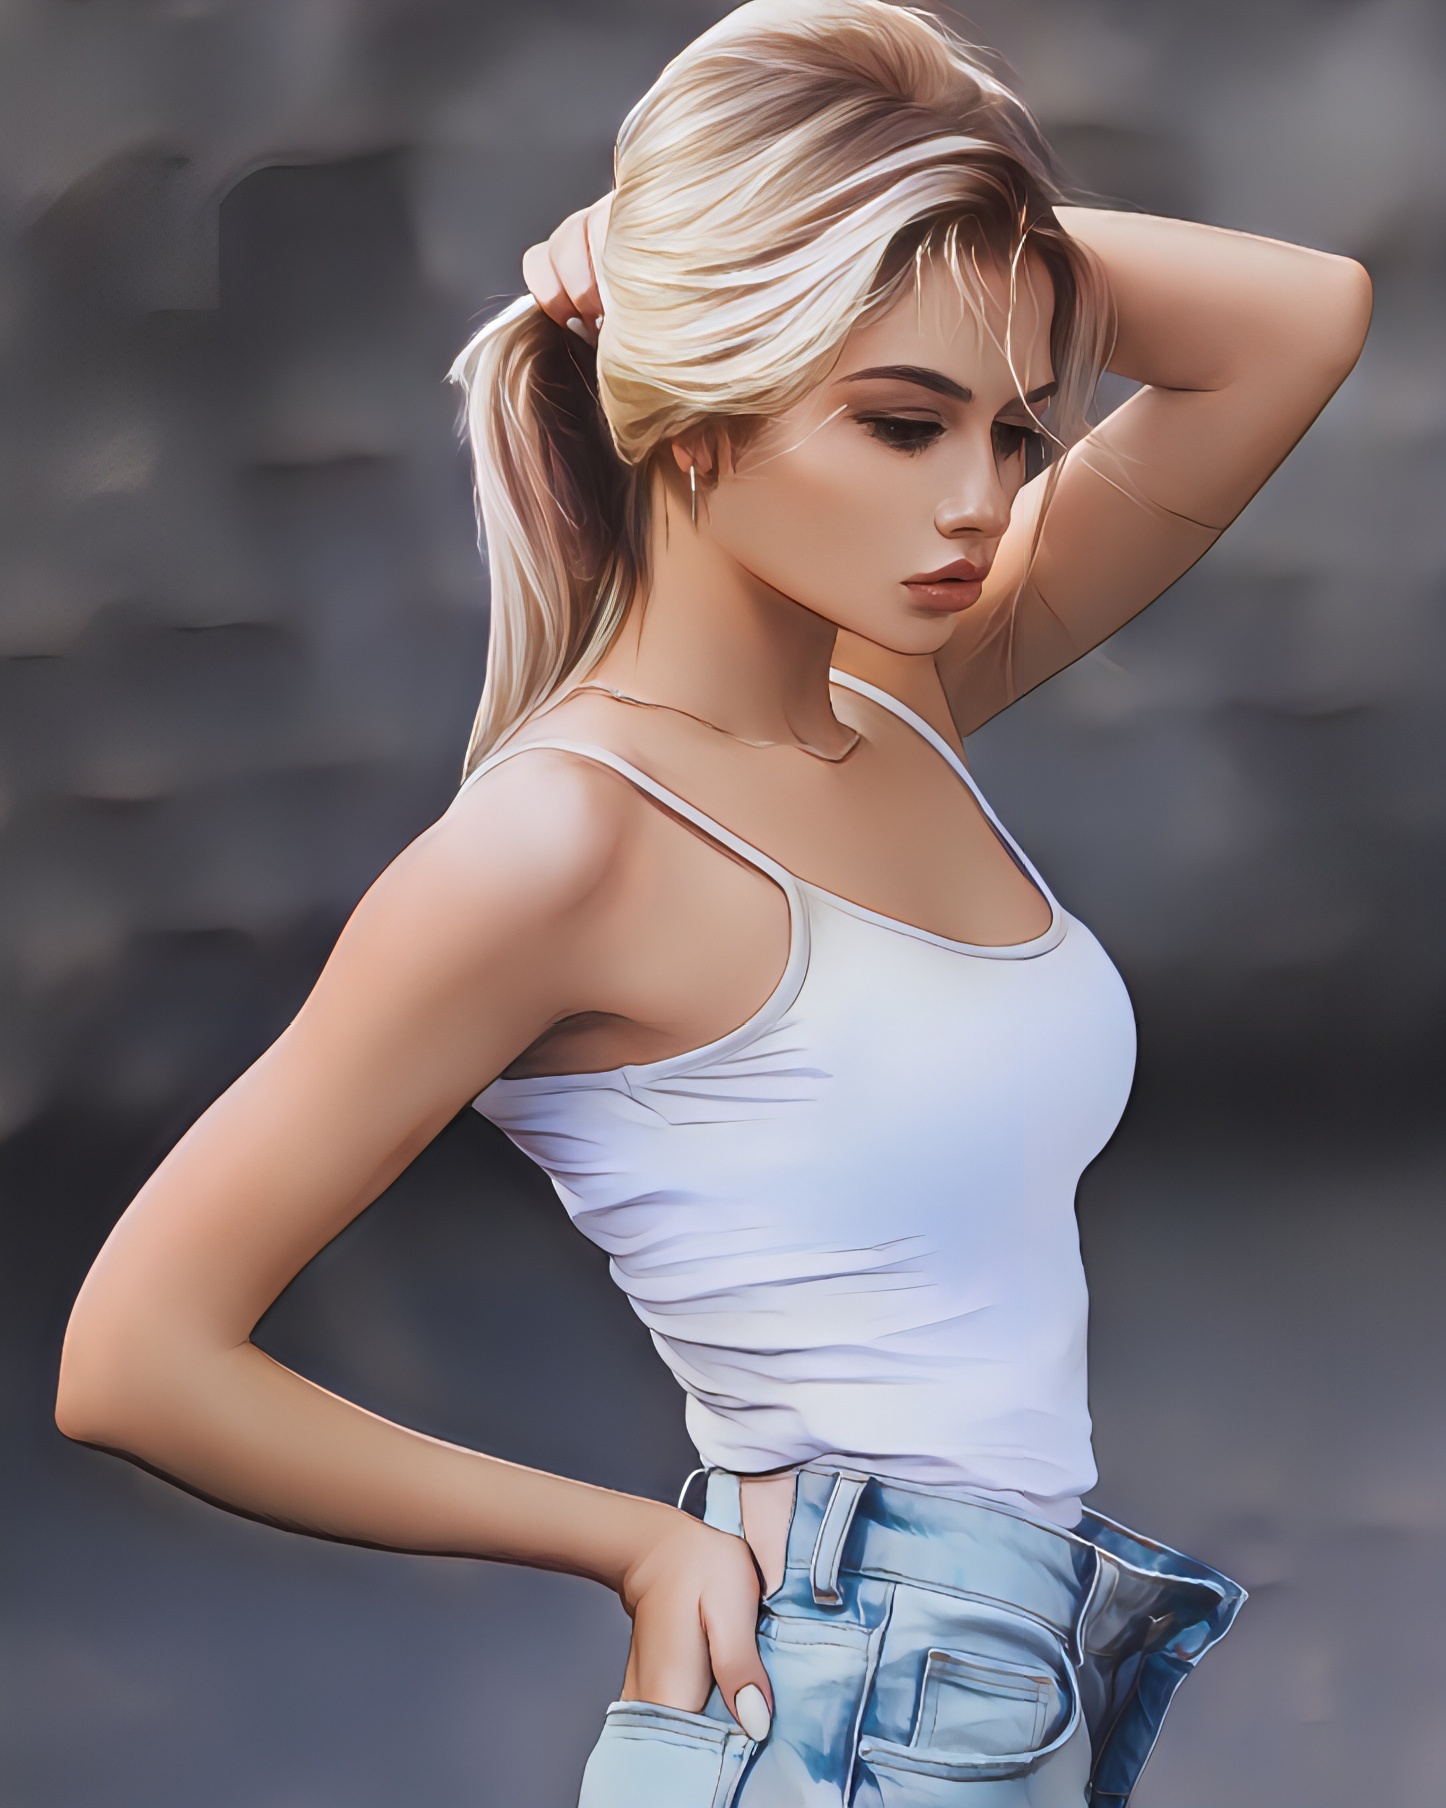 Model Bokeh Women Vertical Blonde Photoshopped 1446x1808